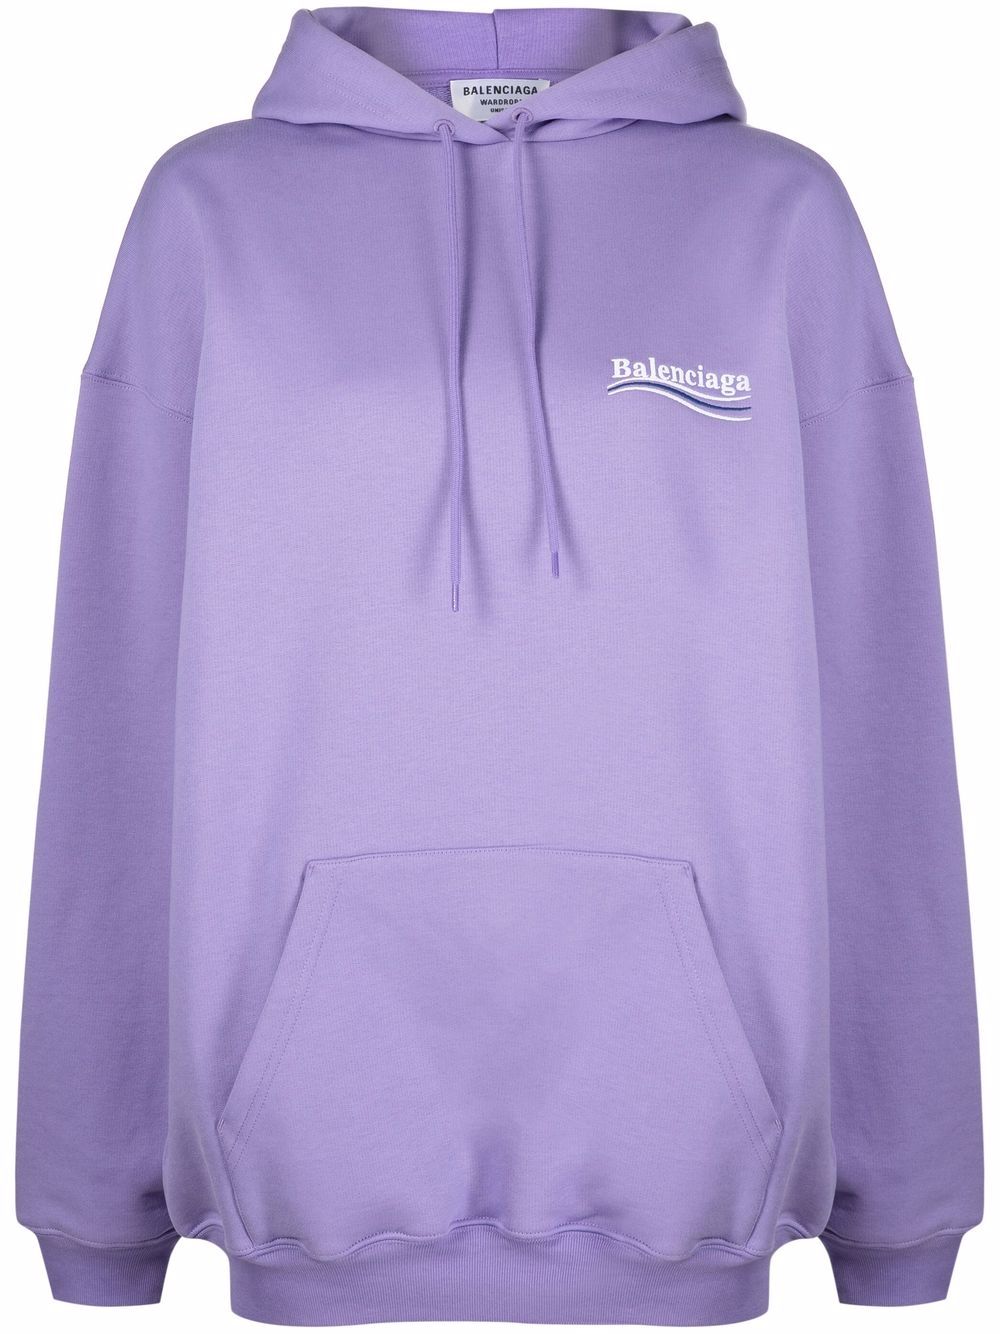 Image 1 of Balenciaga embroidered logo hoodie